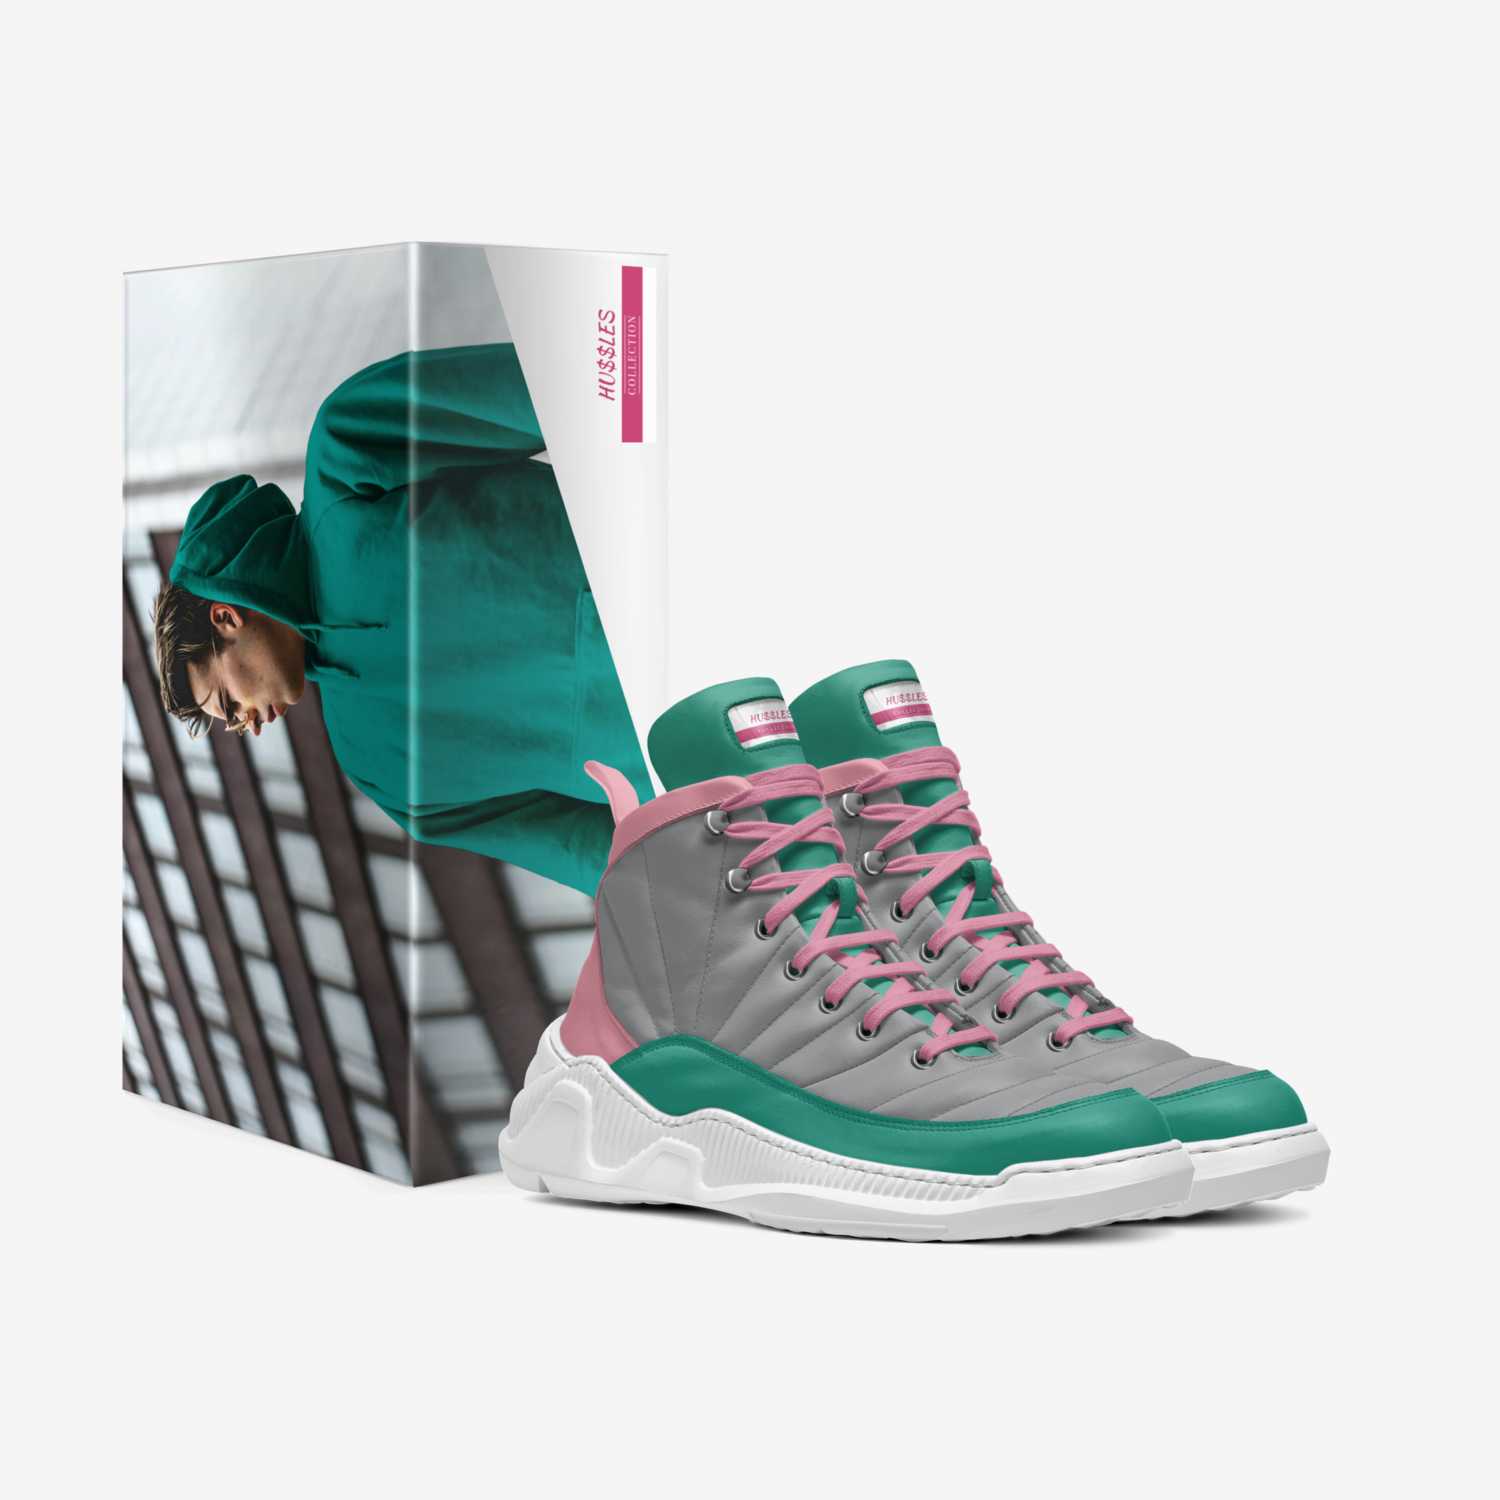 HU$$LES  custom made in Italy shoes by Maygan Johnson | Box view